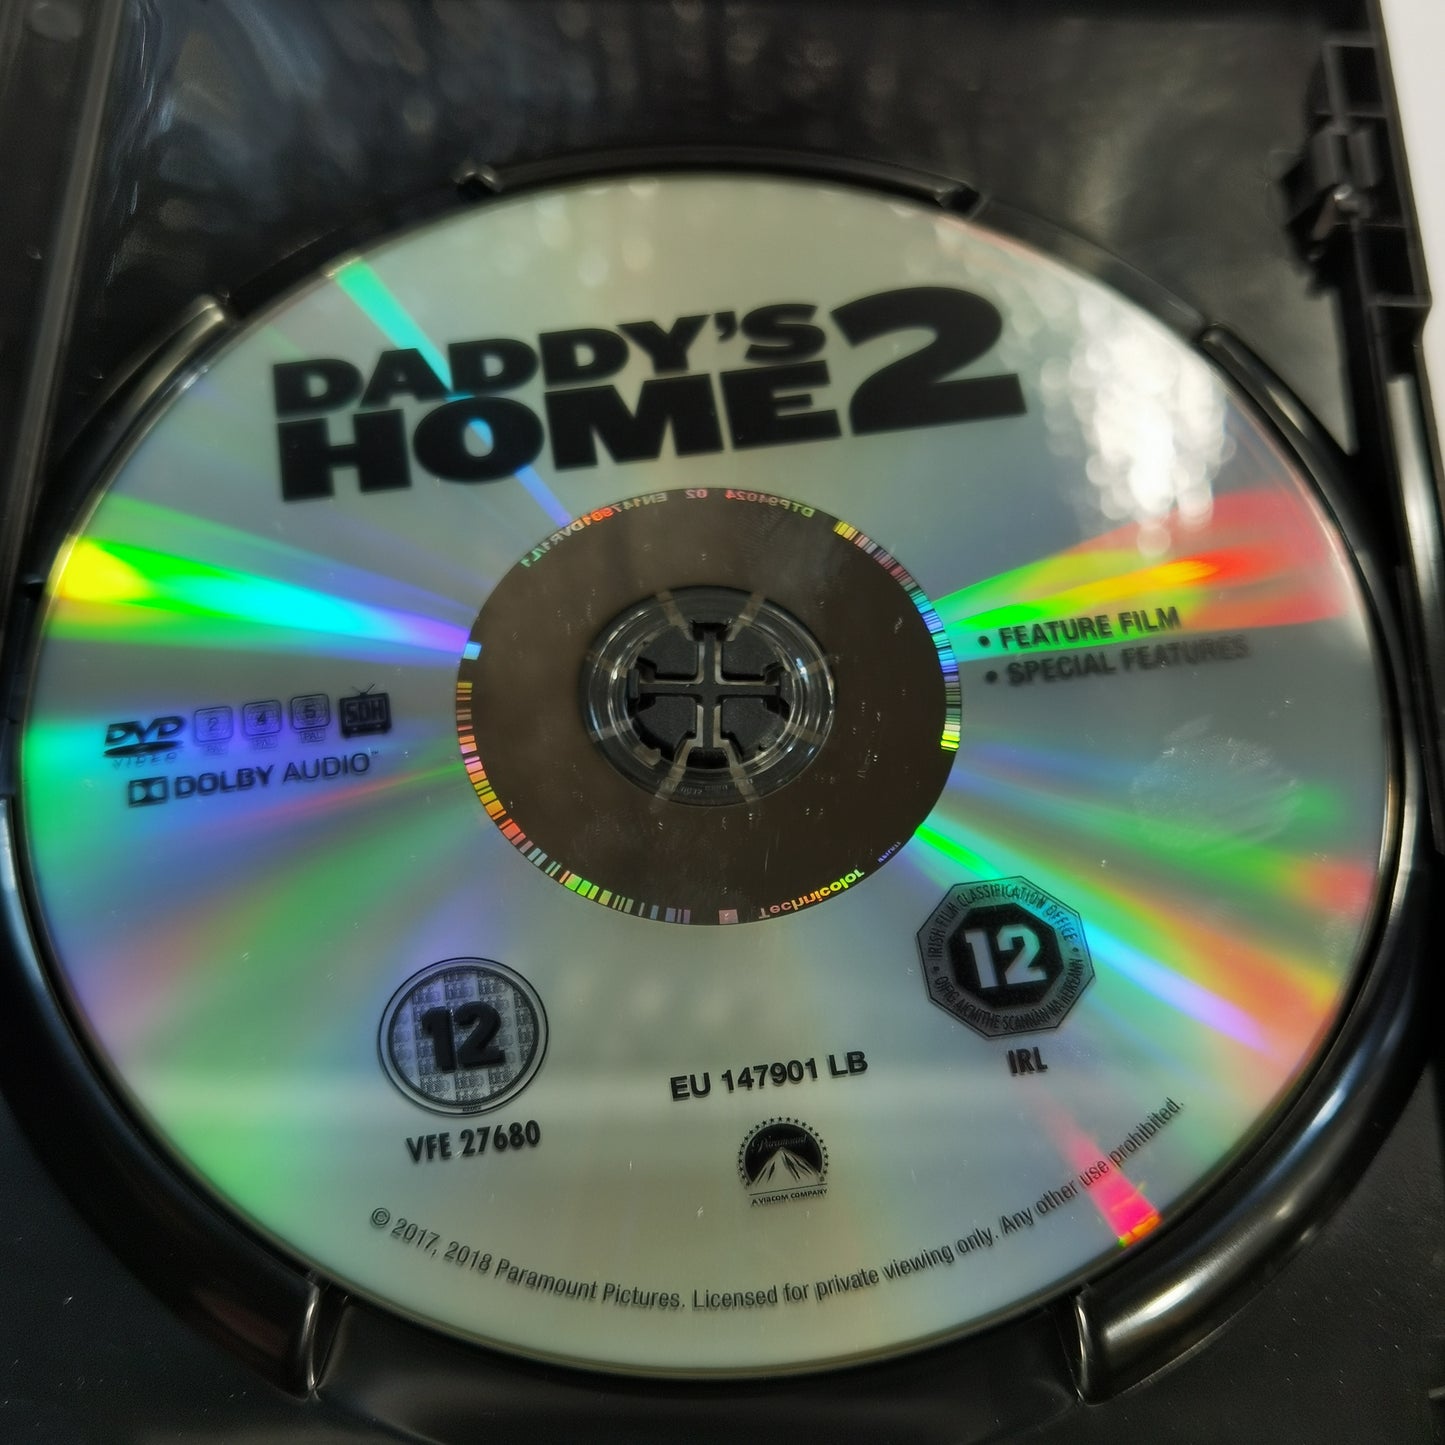 Daddy's Home 2 (2017) - DVD SE NO DK FI 2018